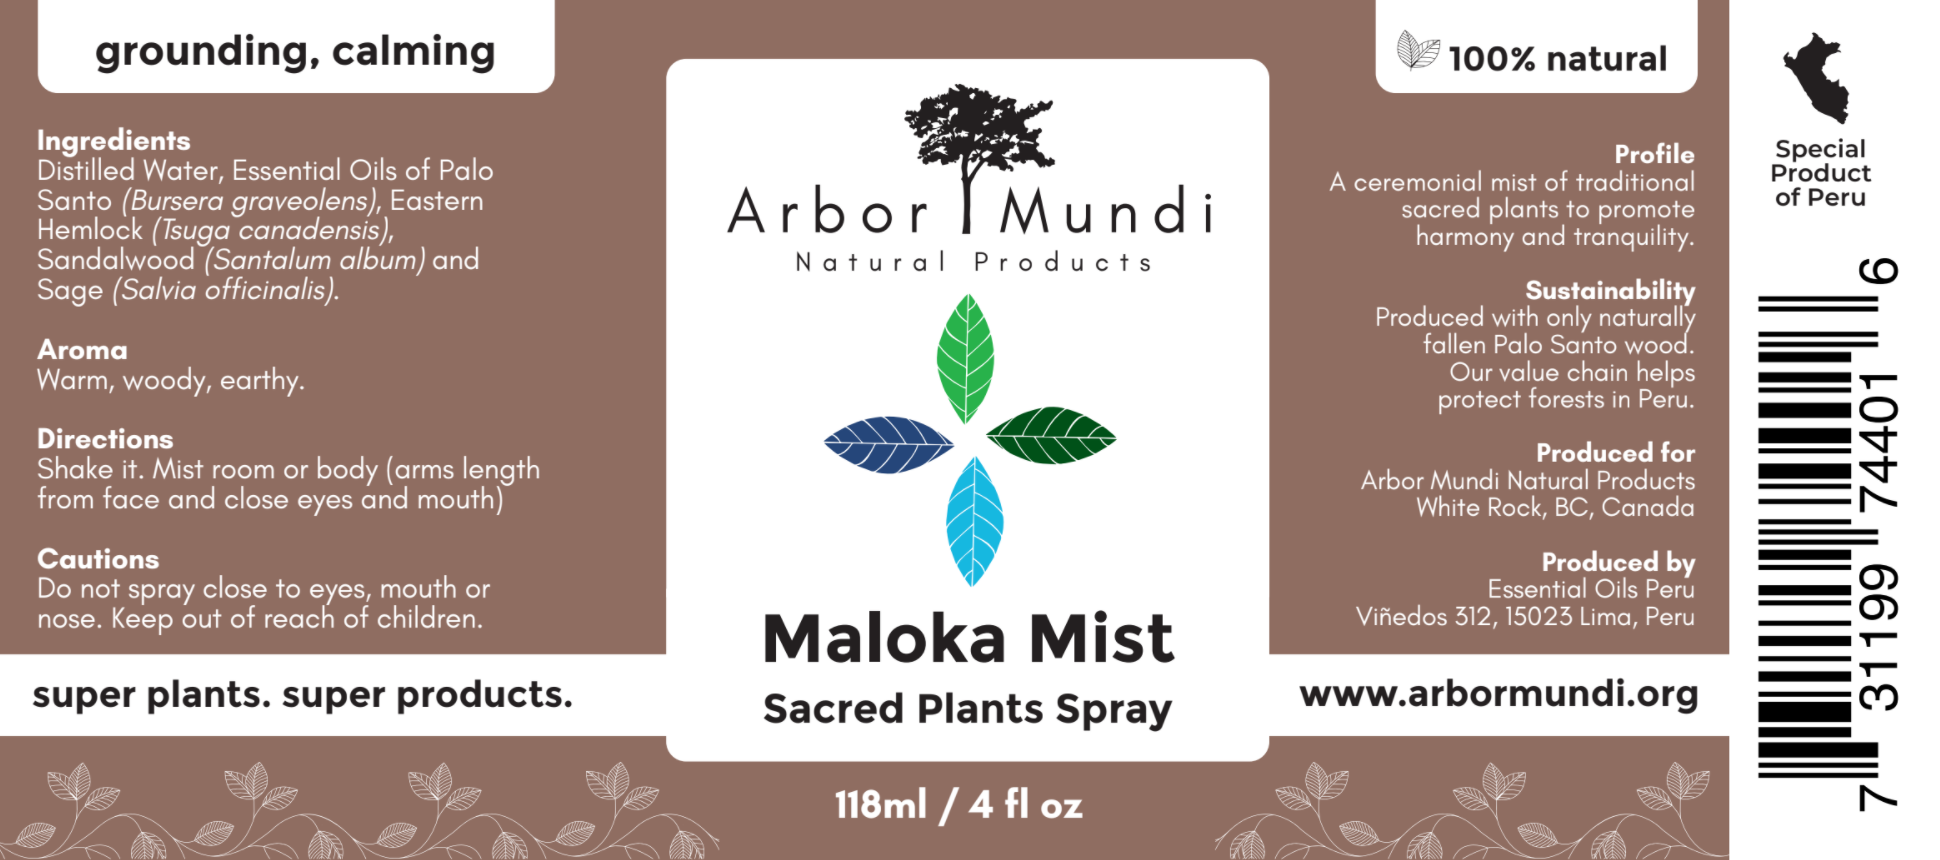 Maloka Mist Sacred Plants Spray